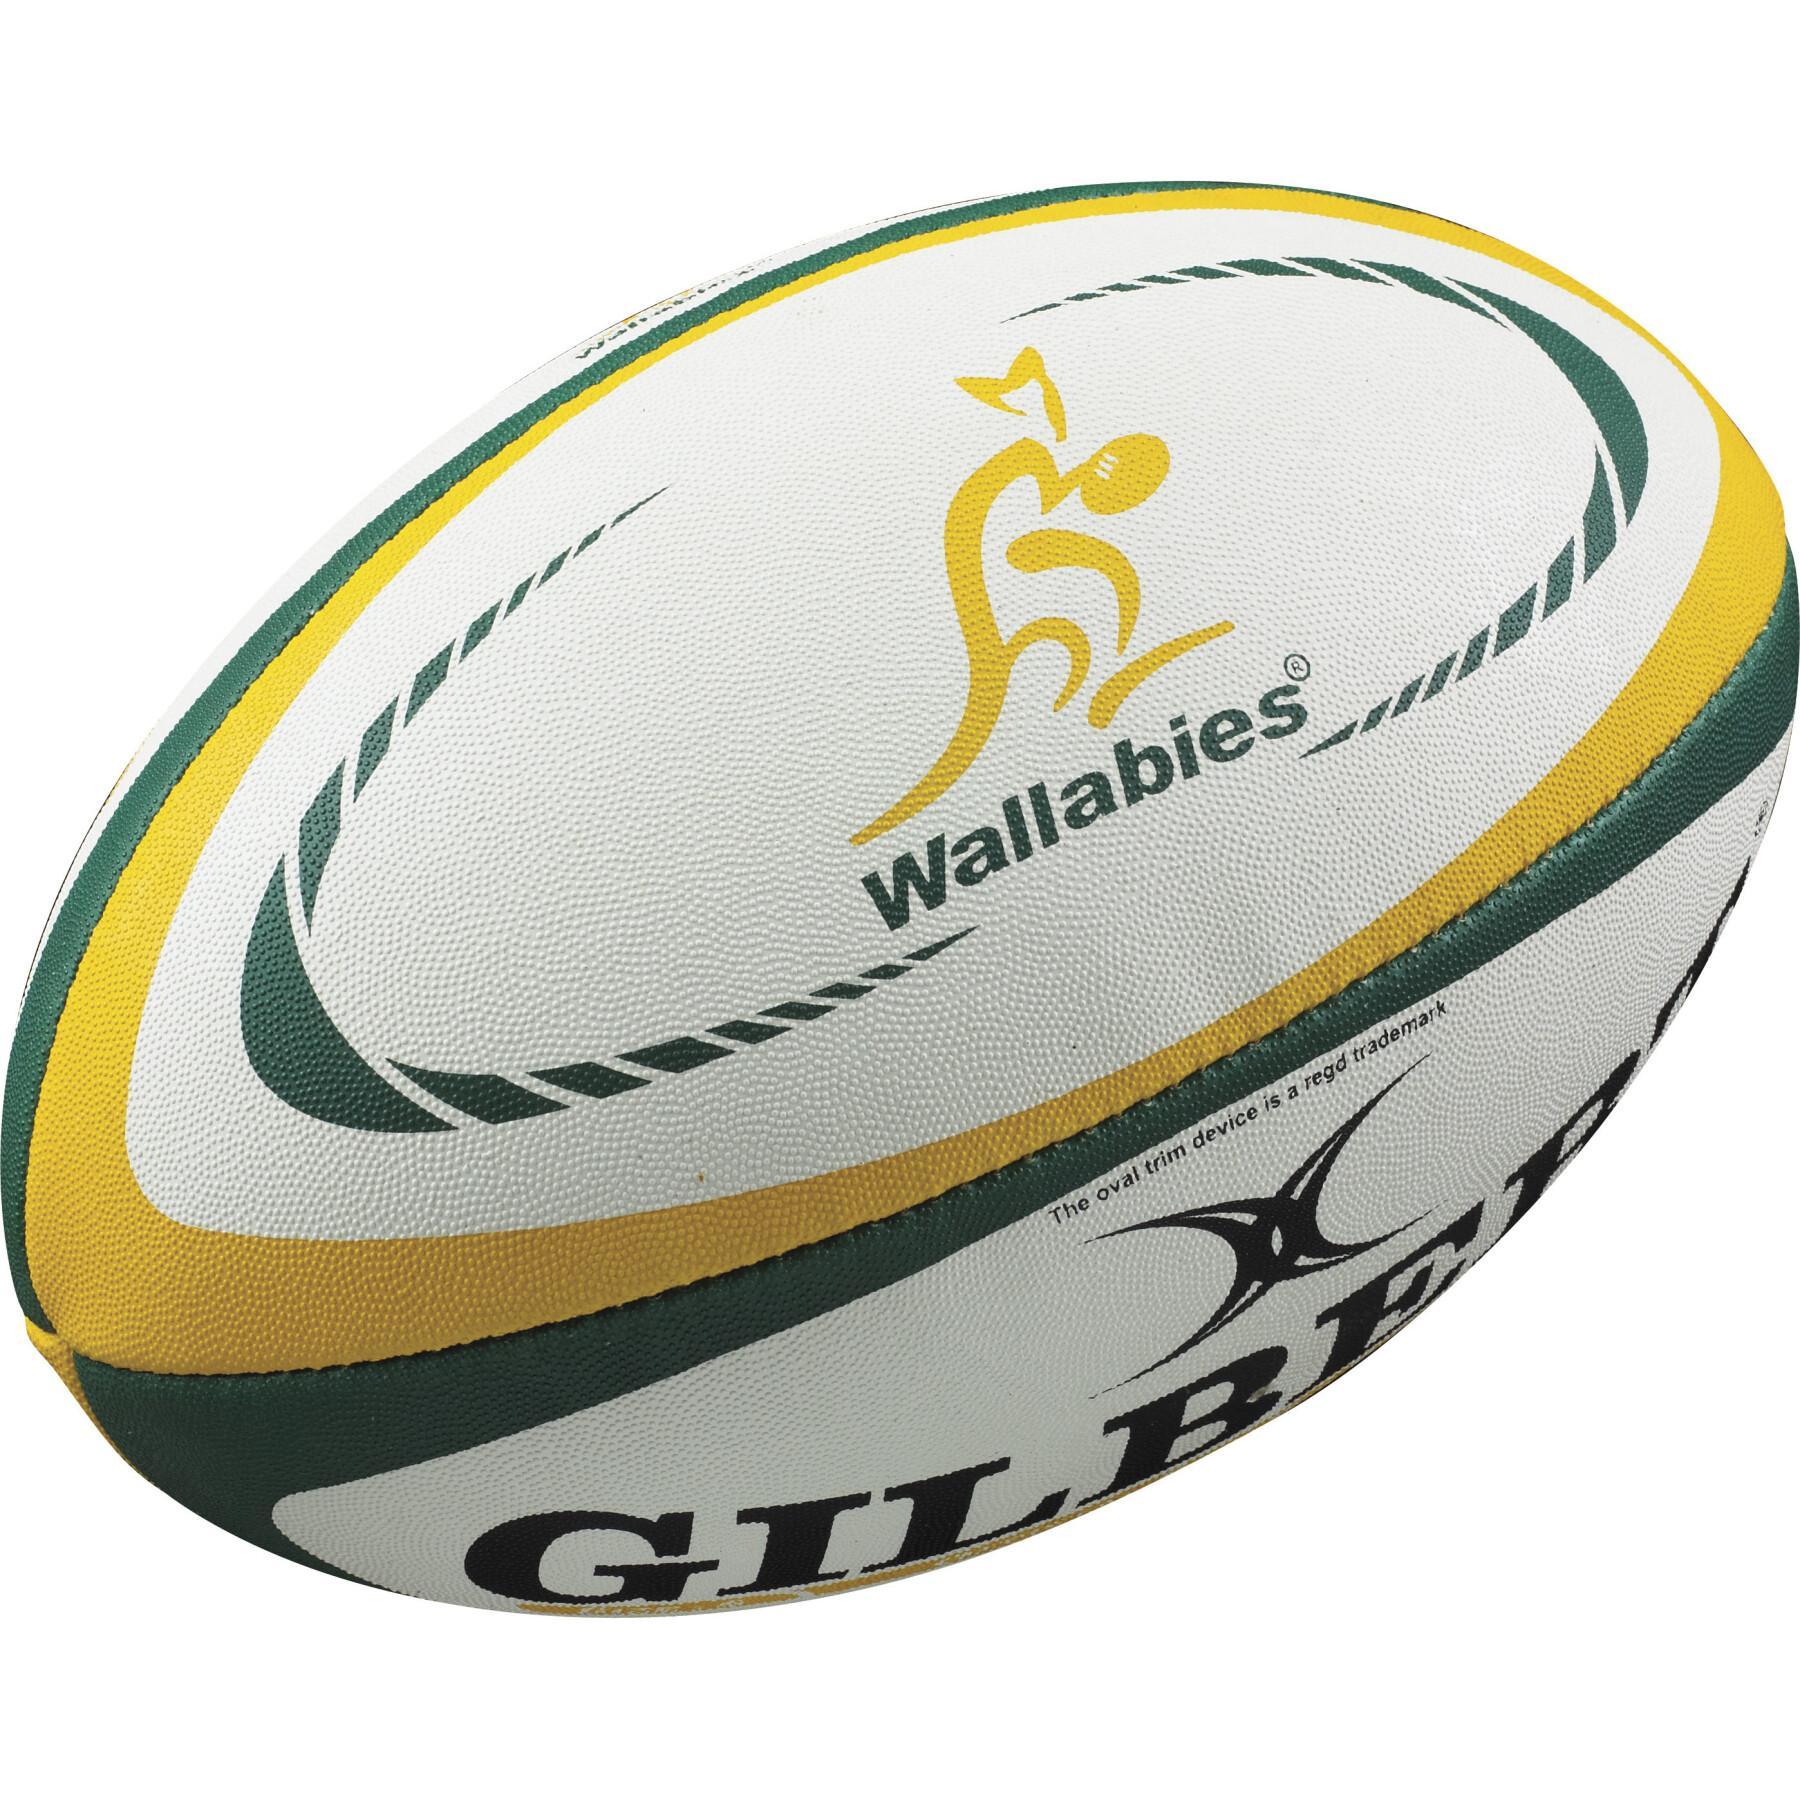 Ballon de rugby Replica Gilbert Australie (taille 5)